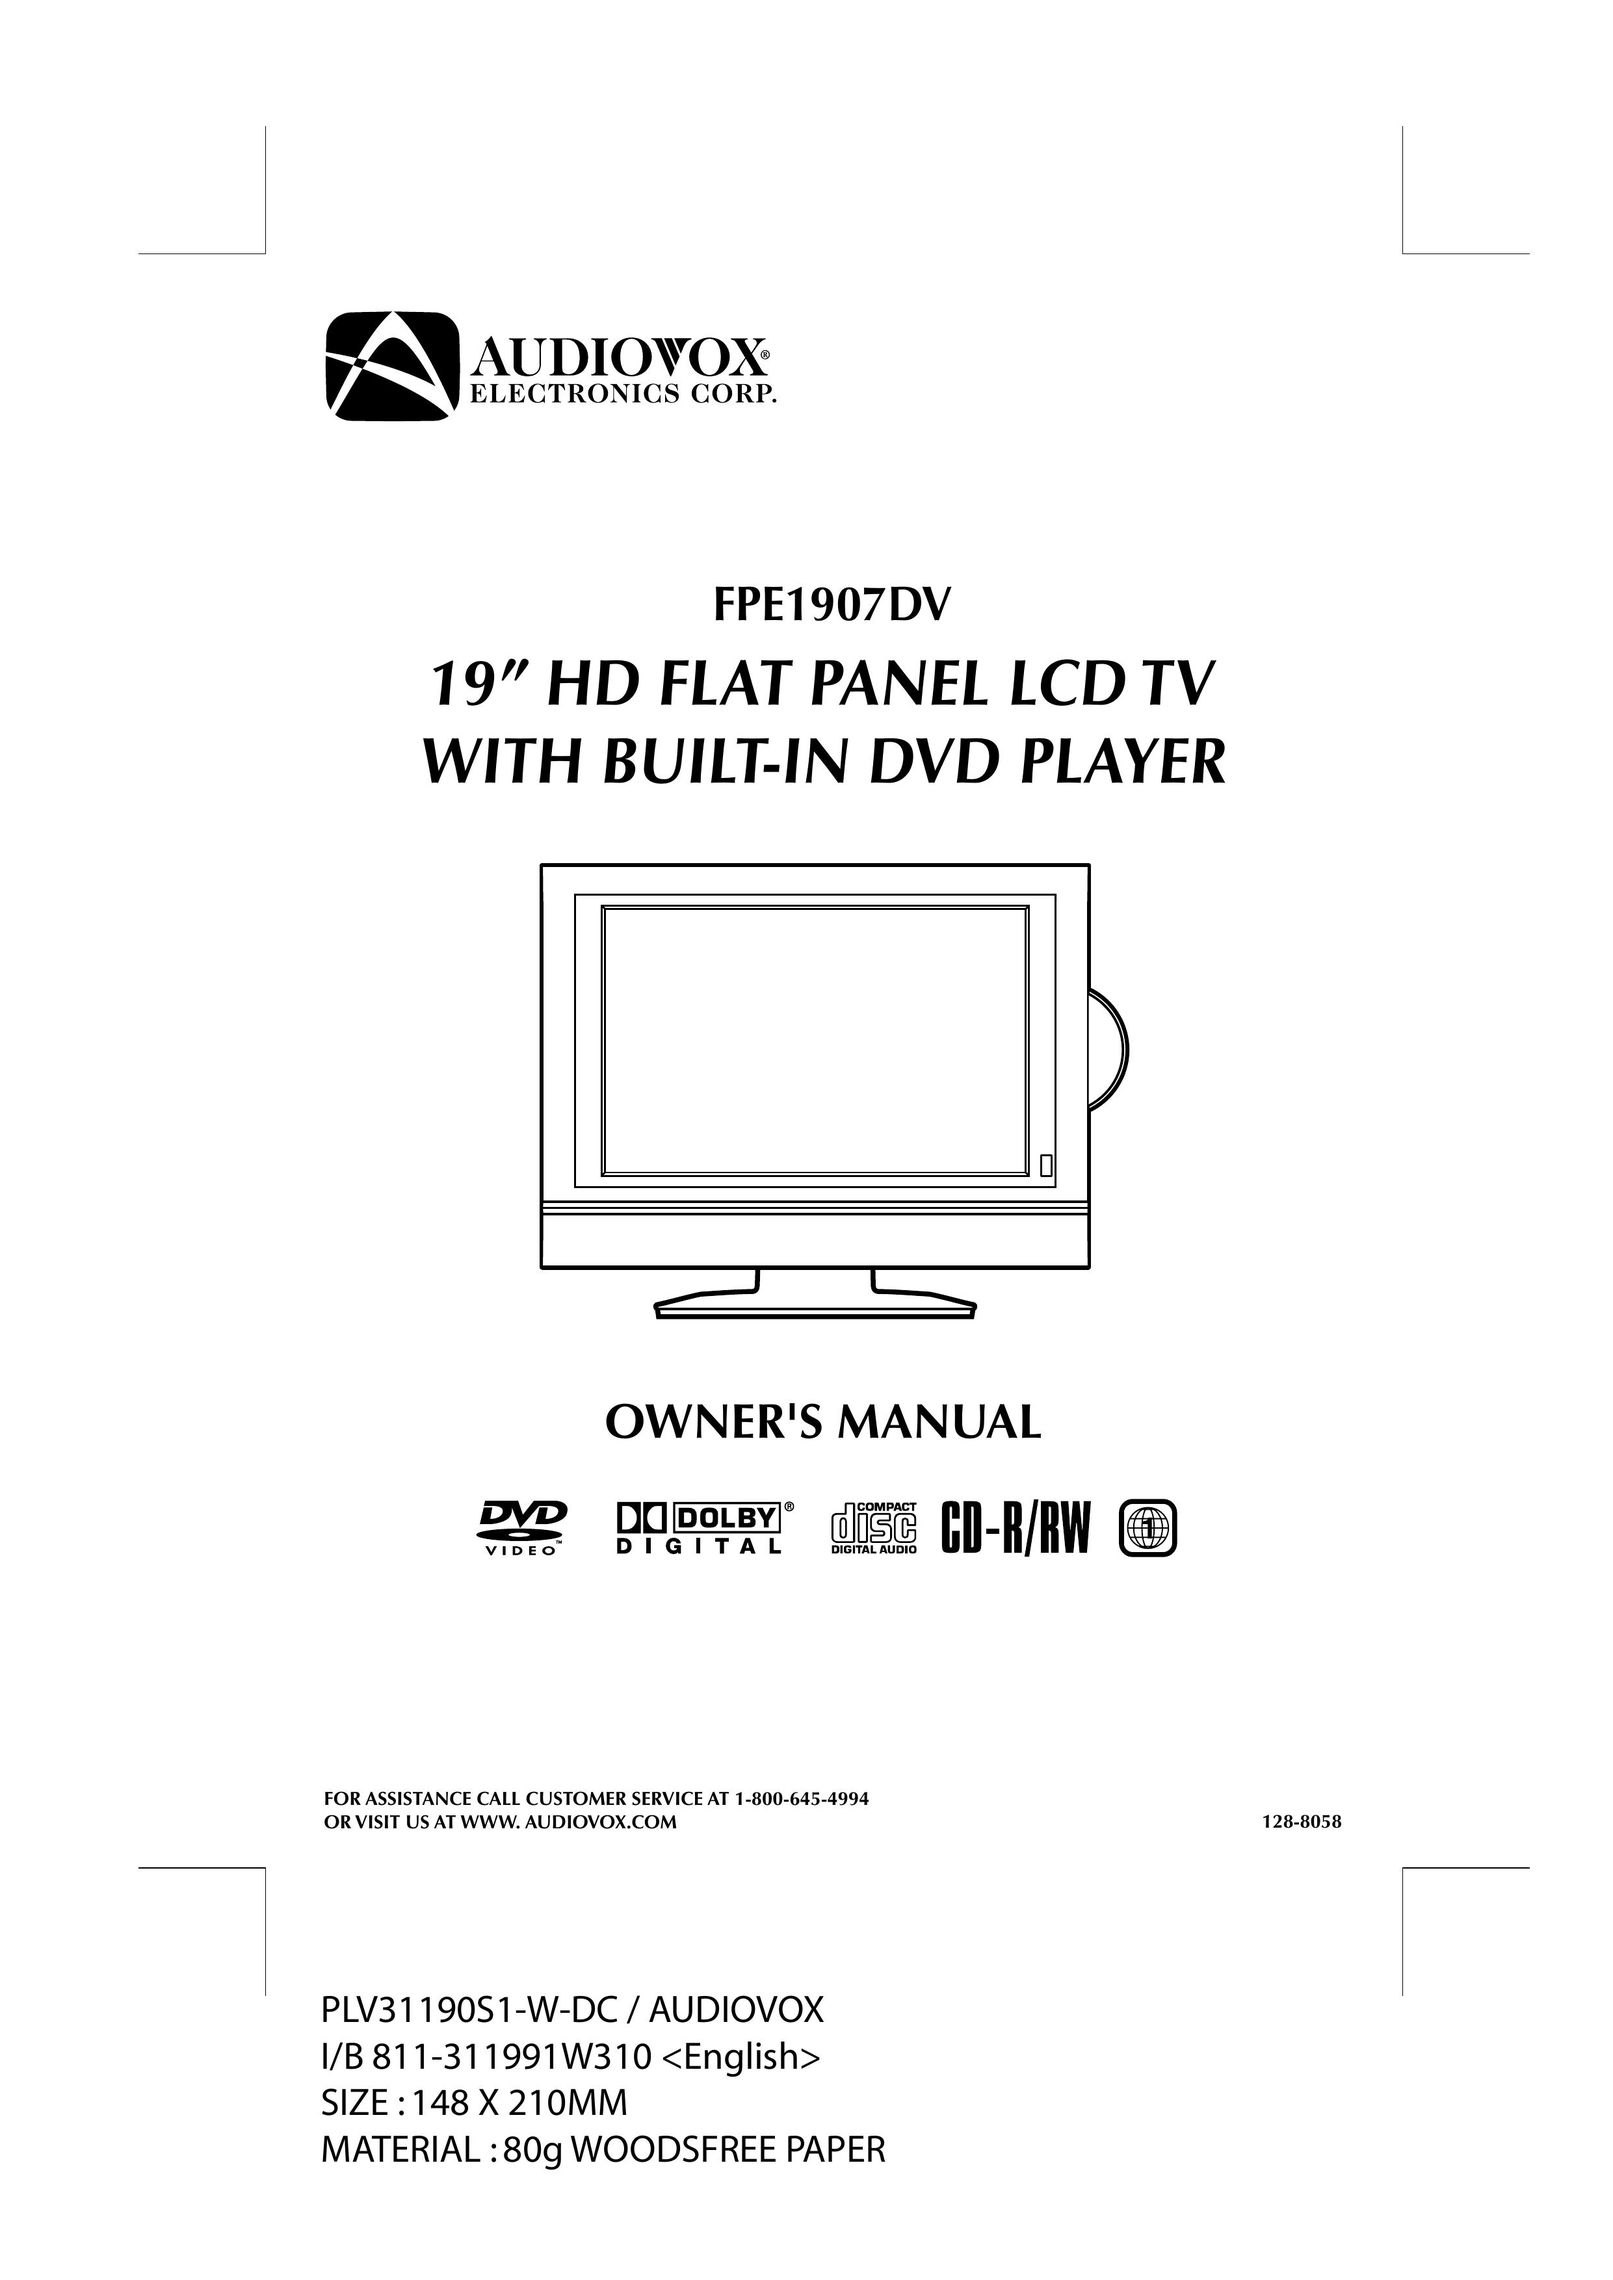 Audiovox FPE1907DV Flat Panel Television User Manual